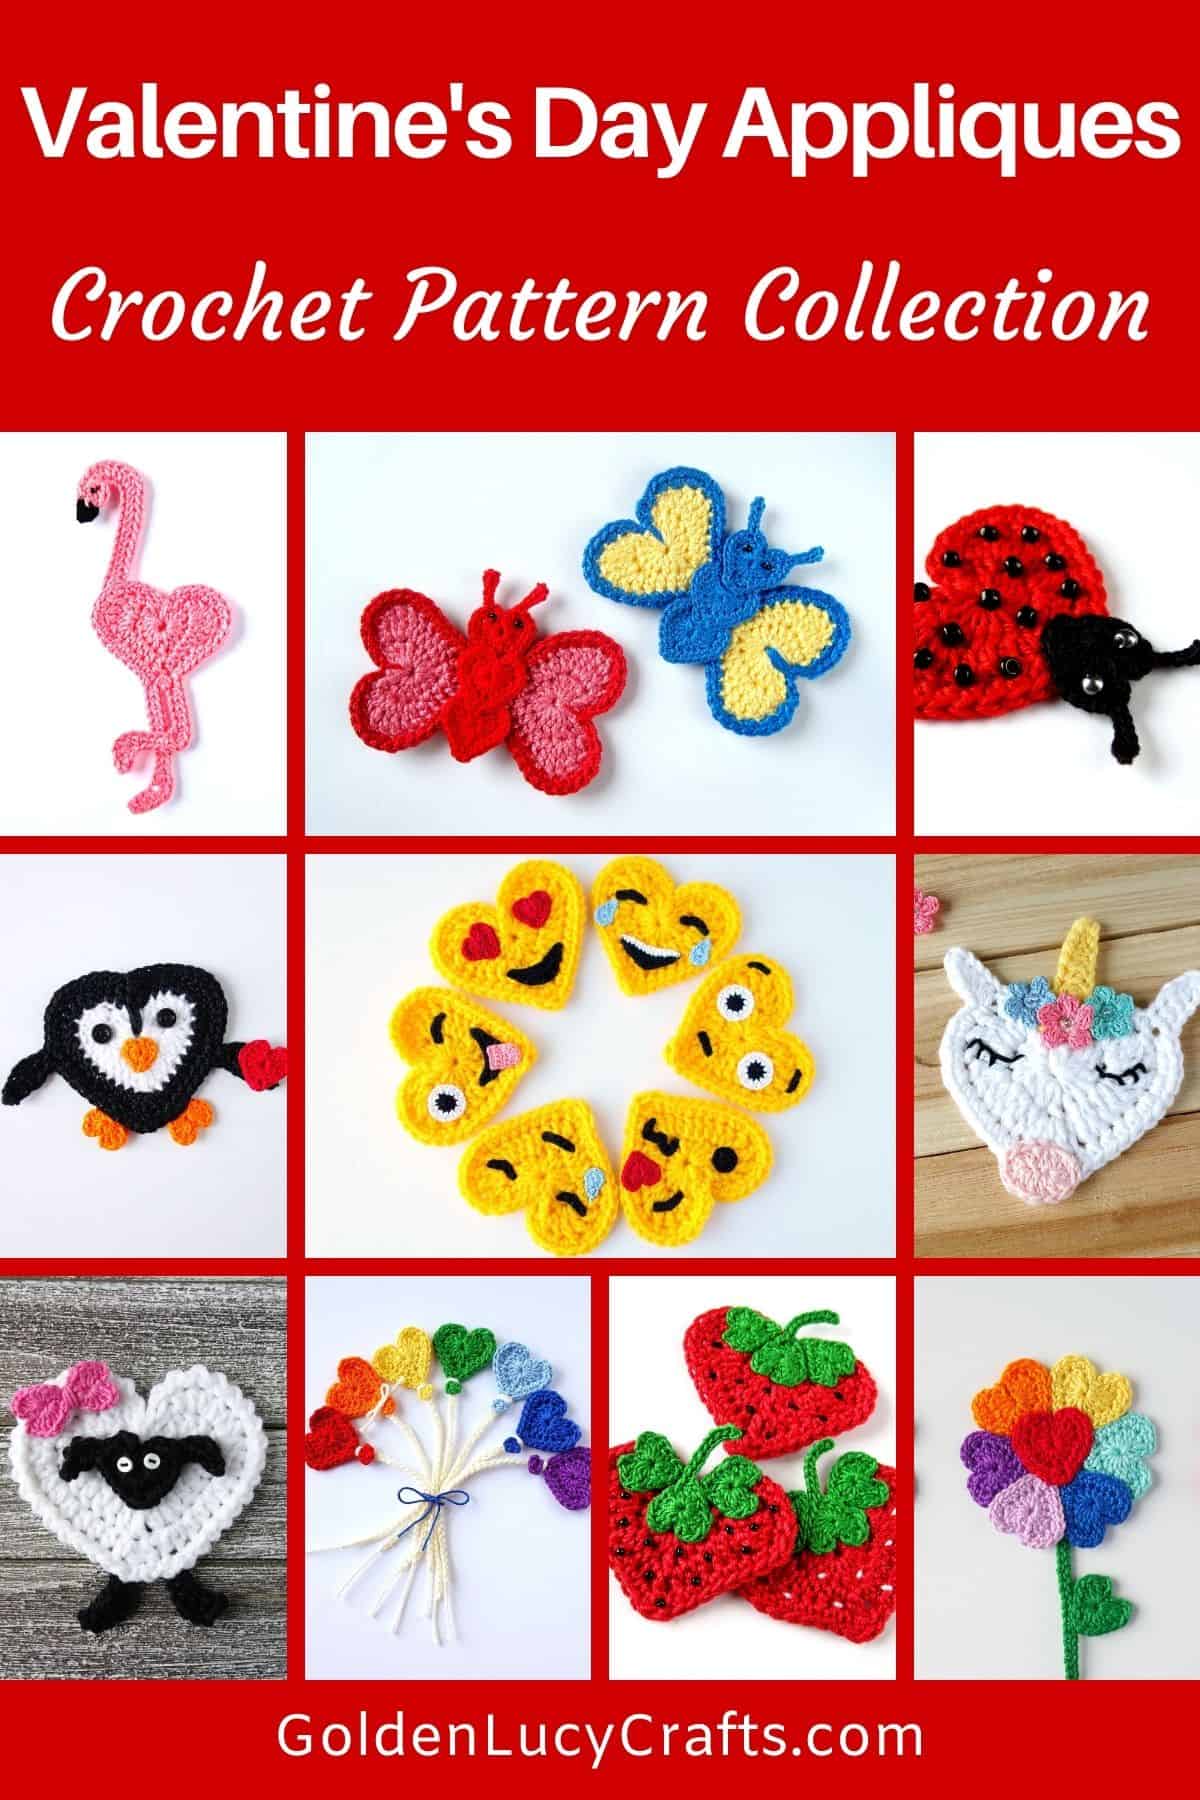 Free Crochet Patterns For Valentine's Day – GoldenLucyCrafts